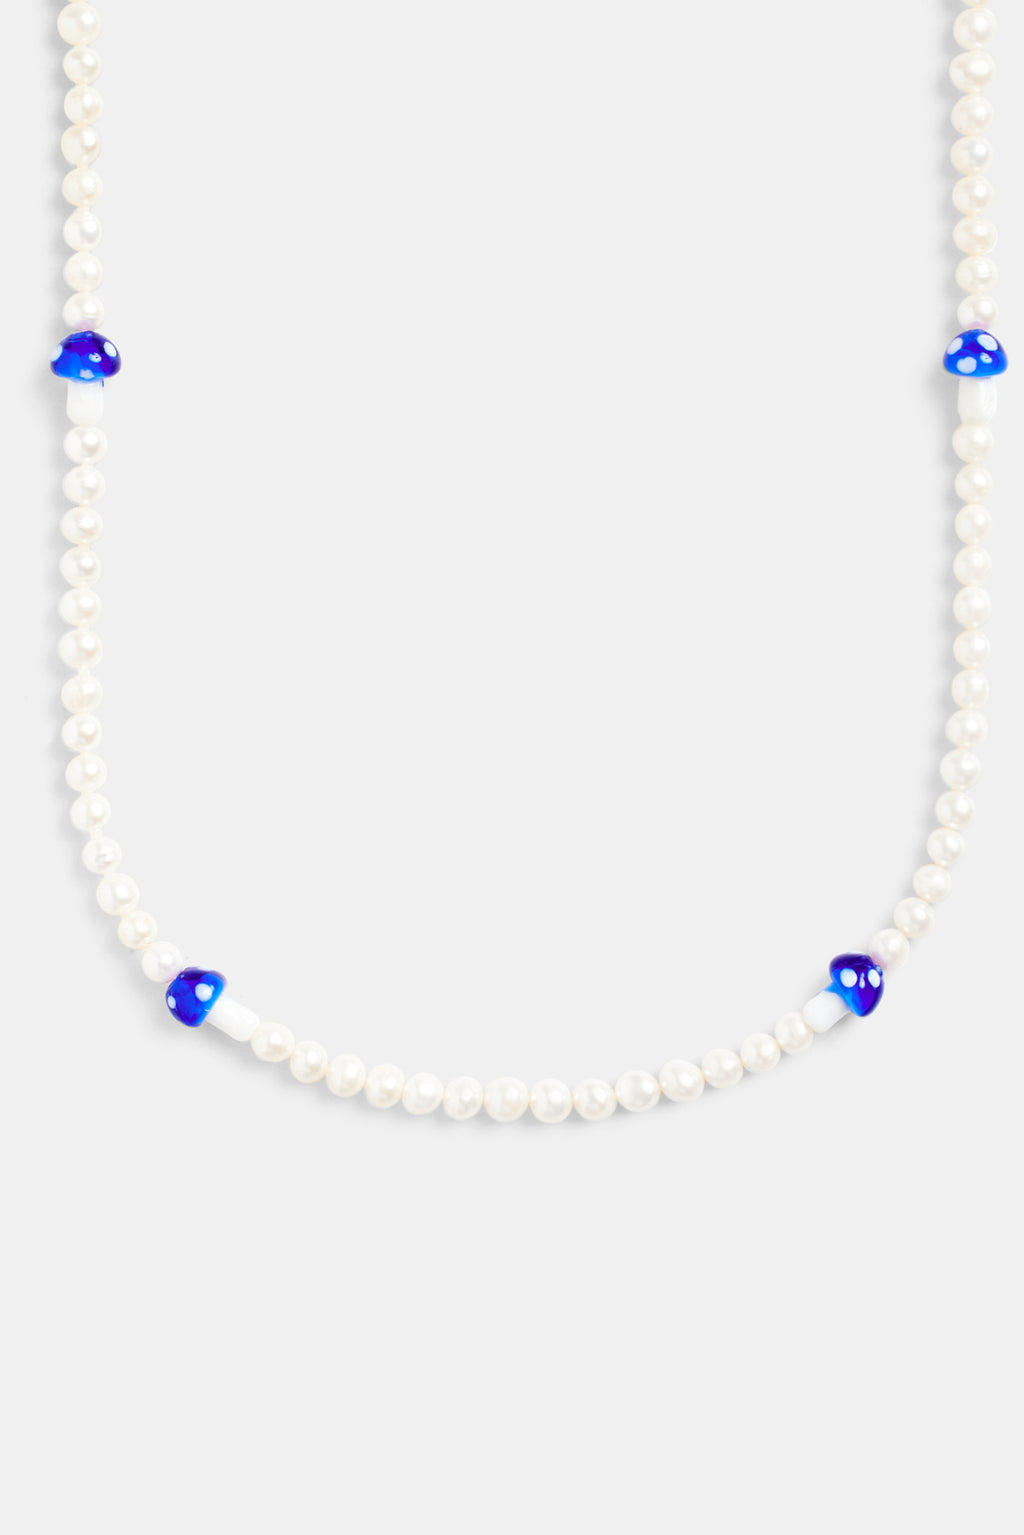 pearl+mushroom/ necklace | By Linus Joe